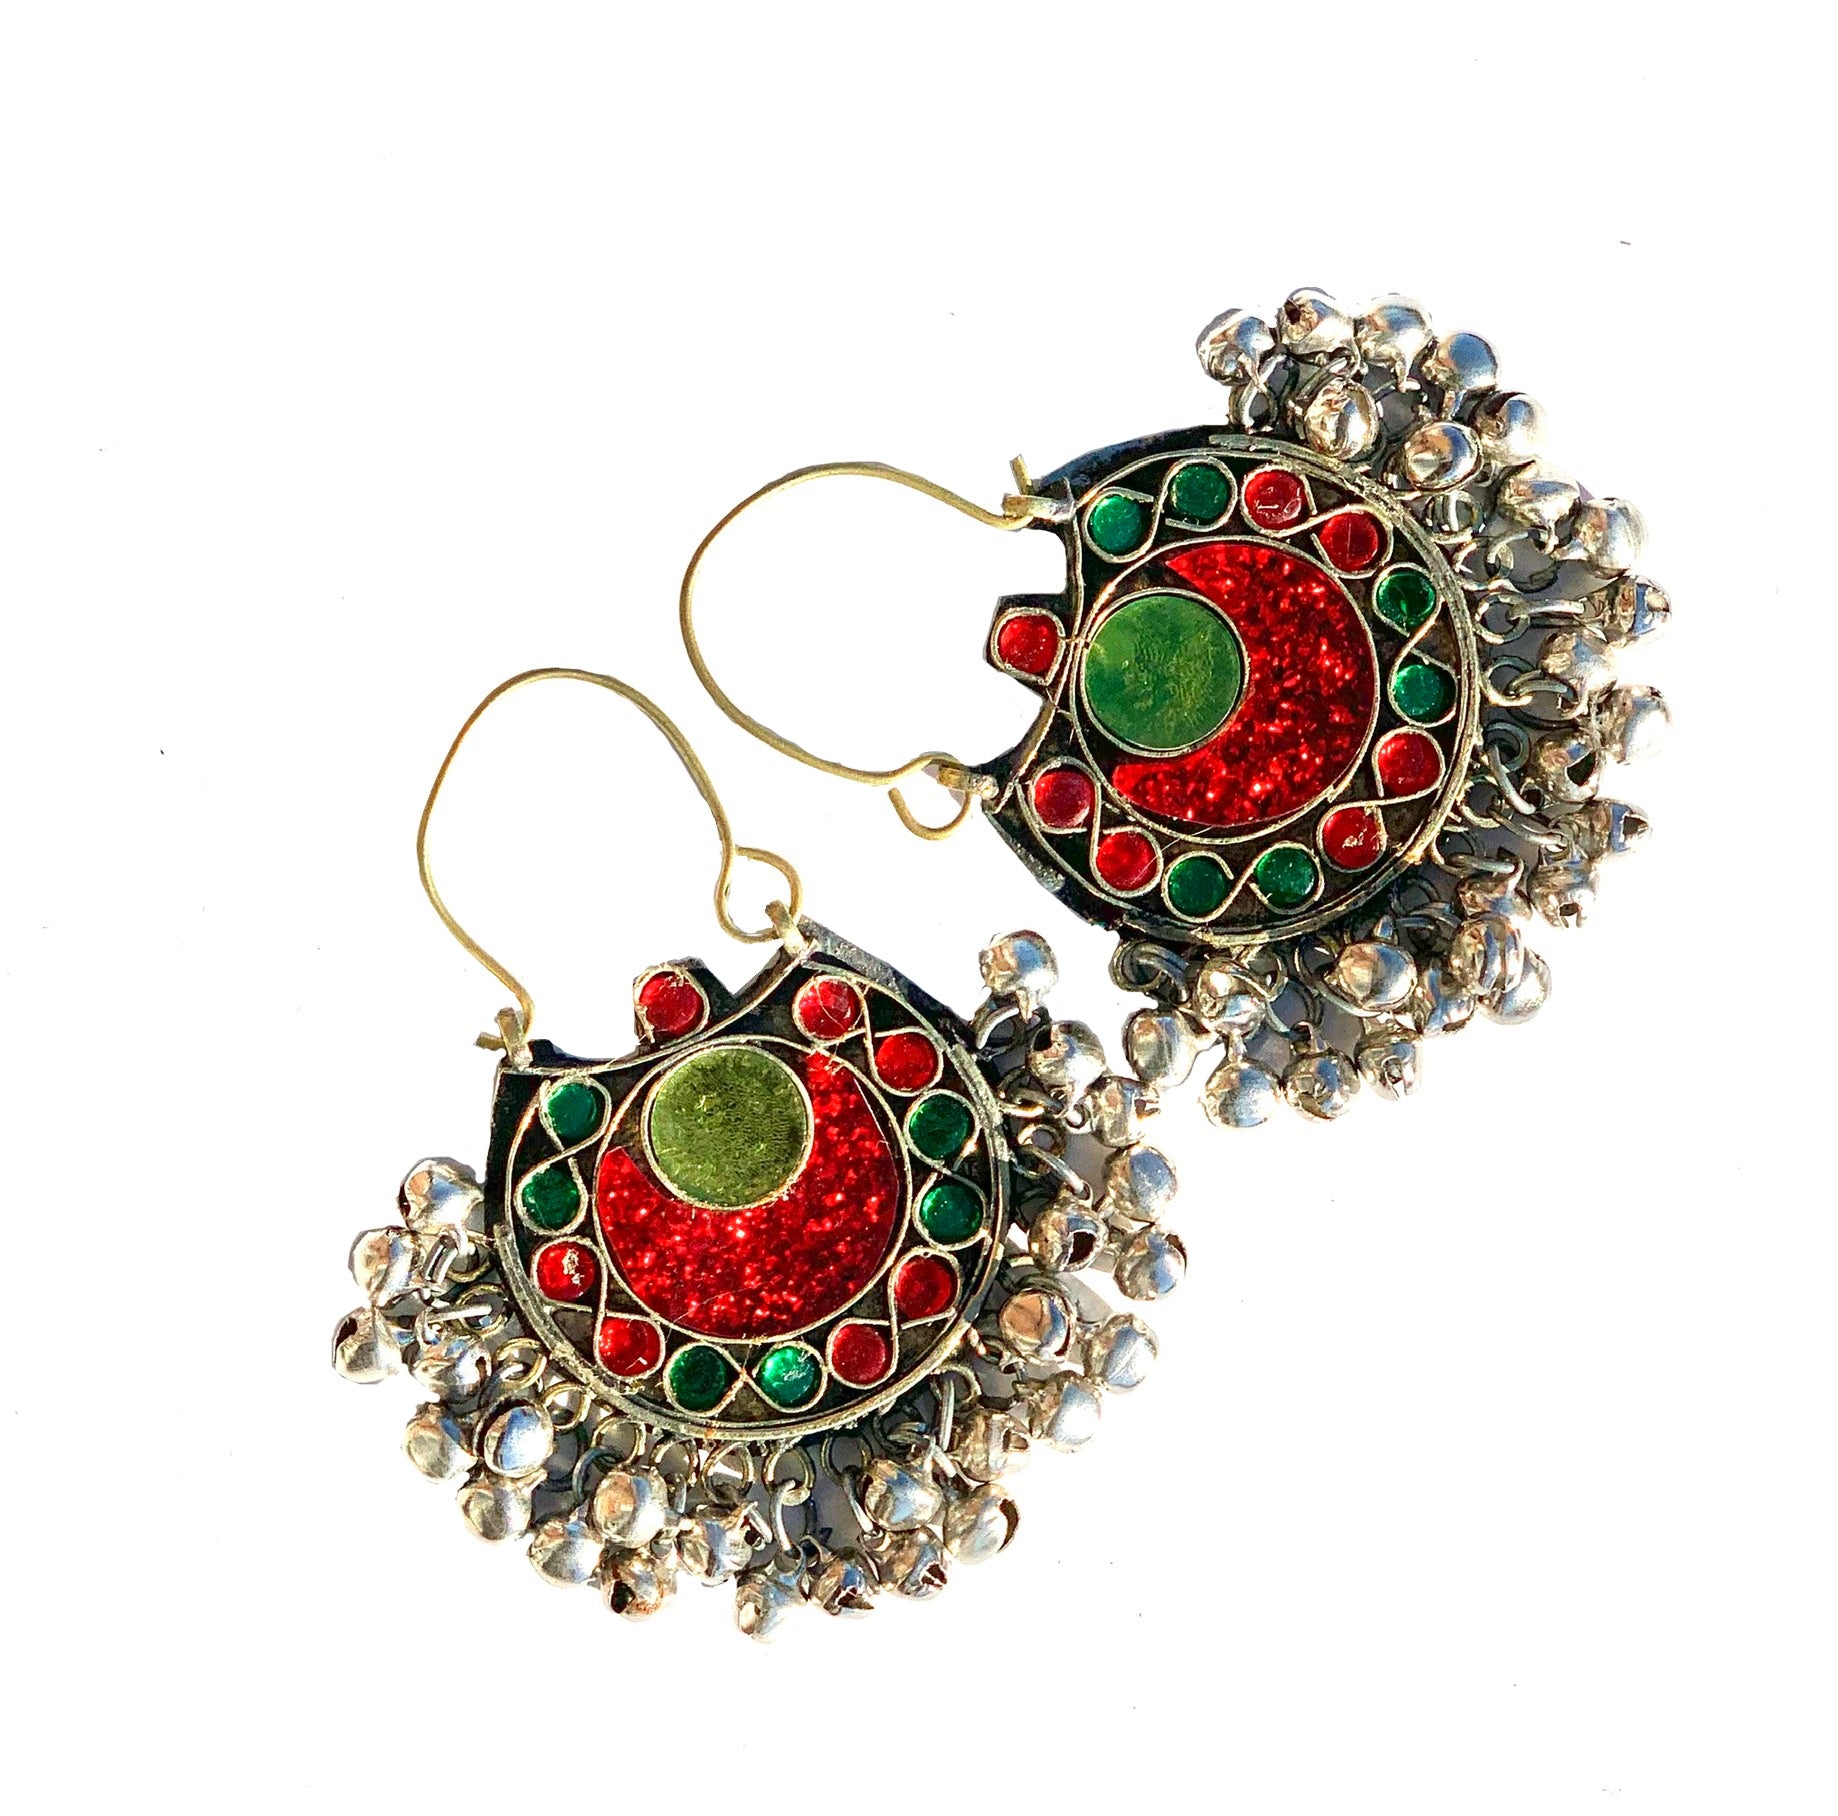 FARI- Antique Afghan Silver Earrings with Bells